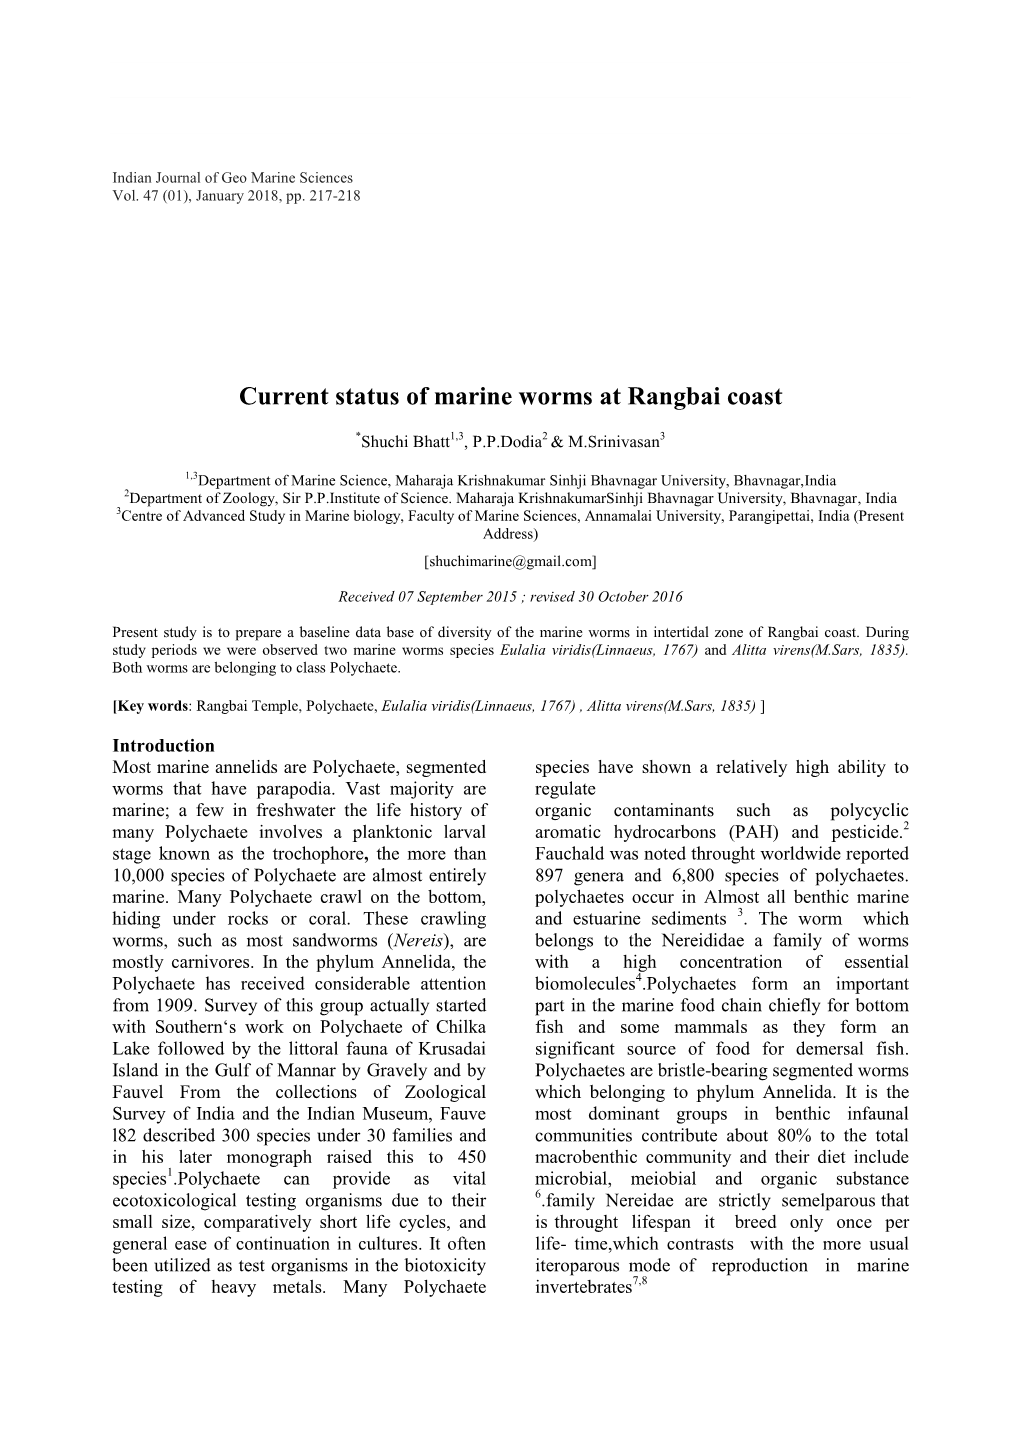 Current Status of Marine Worms at Rangbai Coast